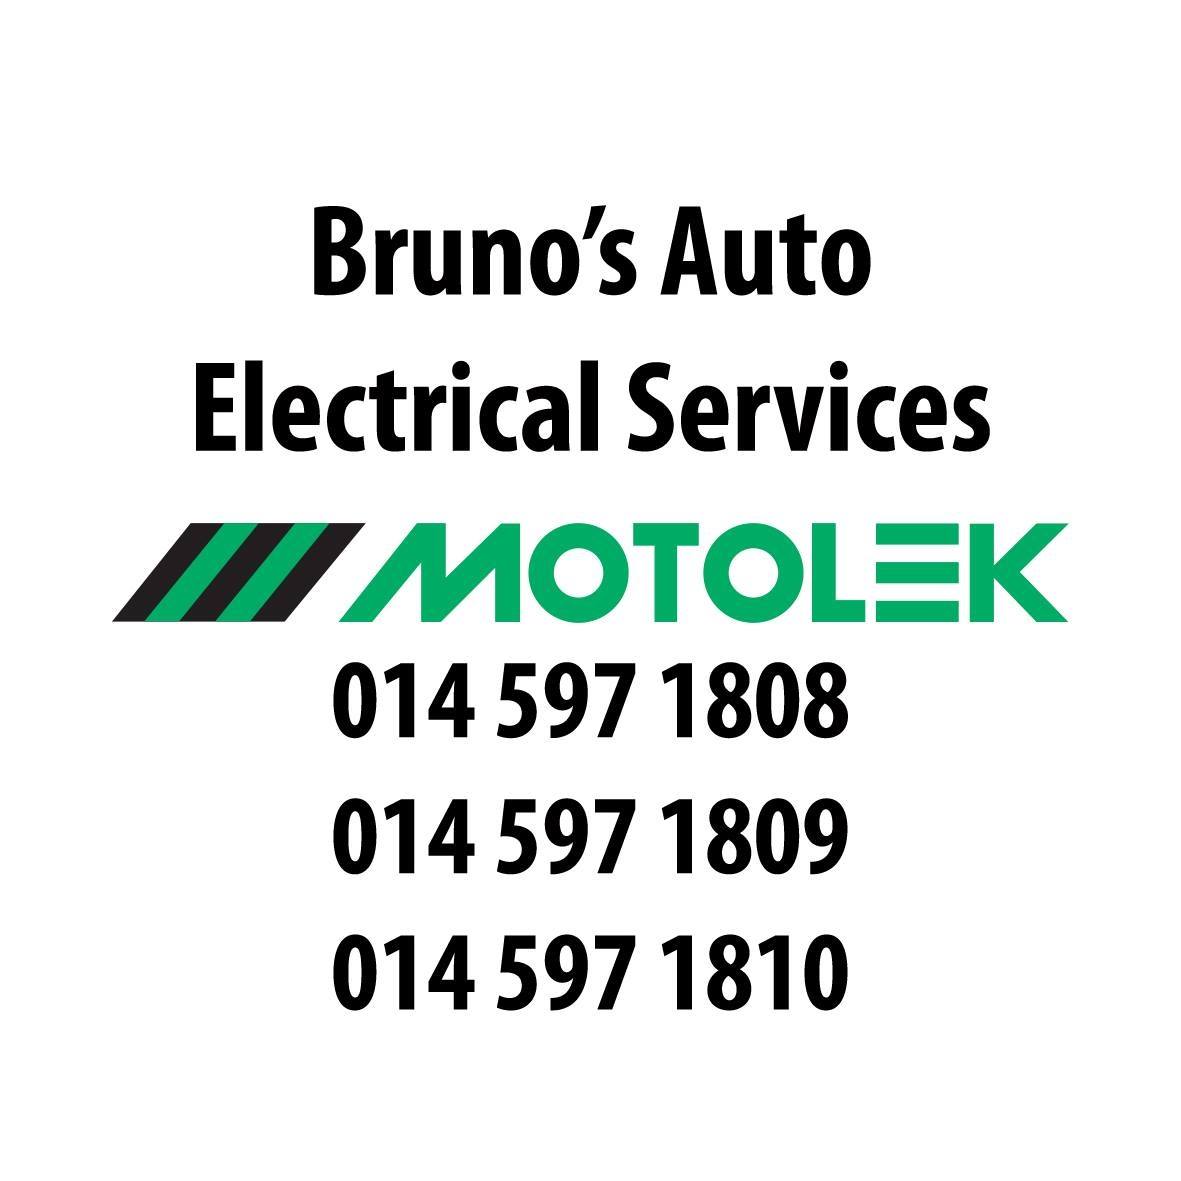 Bruno's Auto Electrical Services cc logo